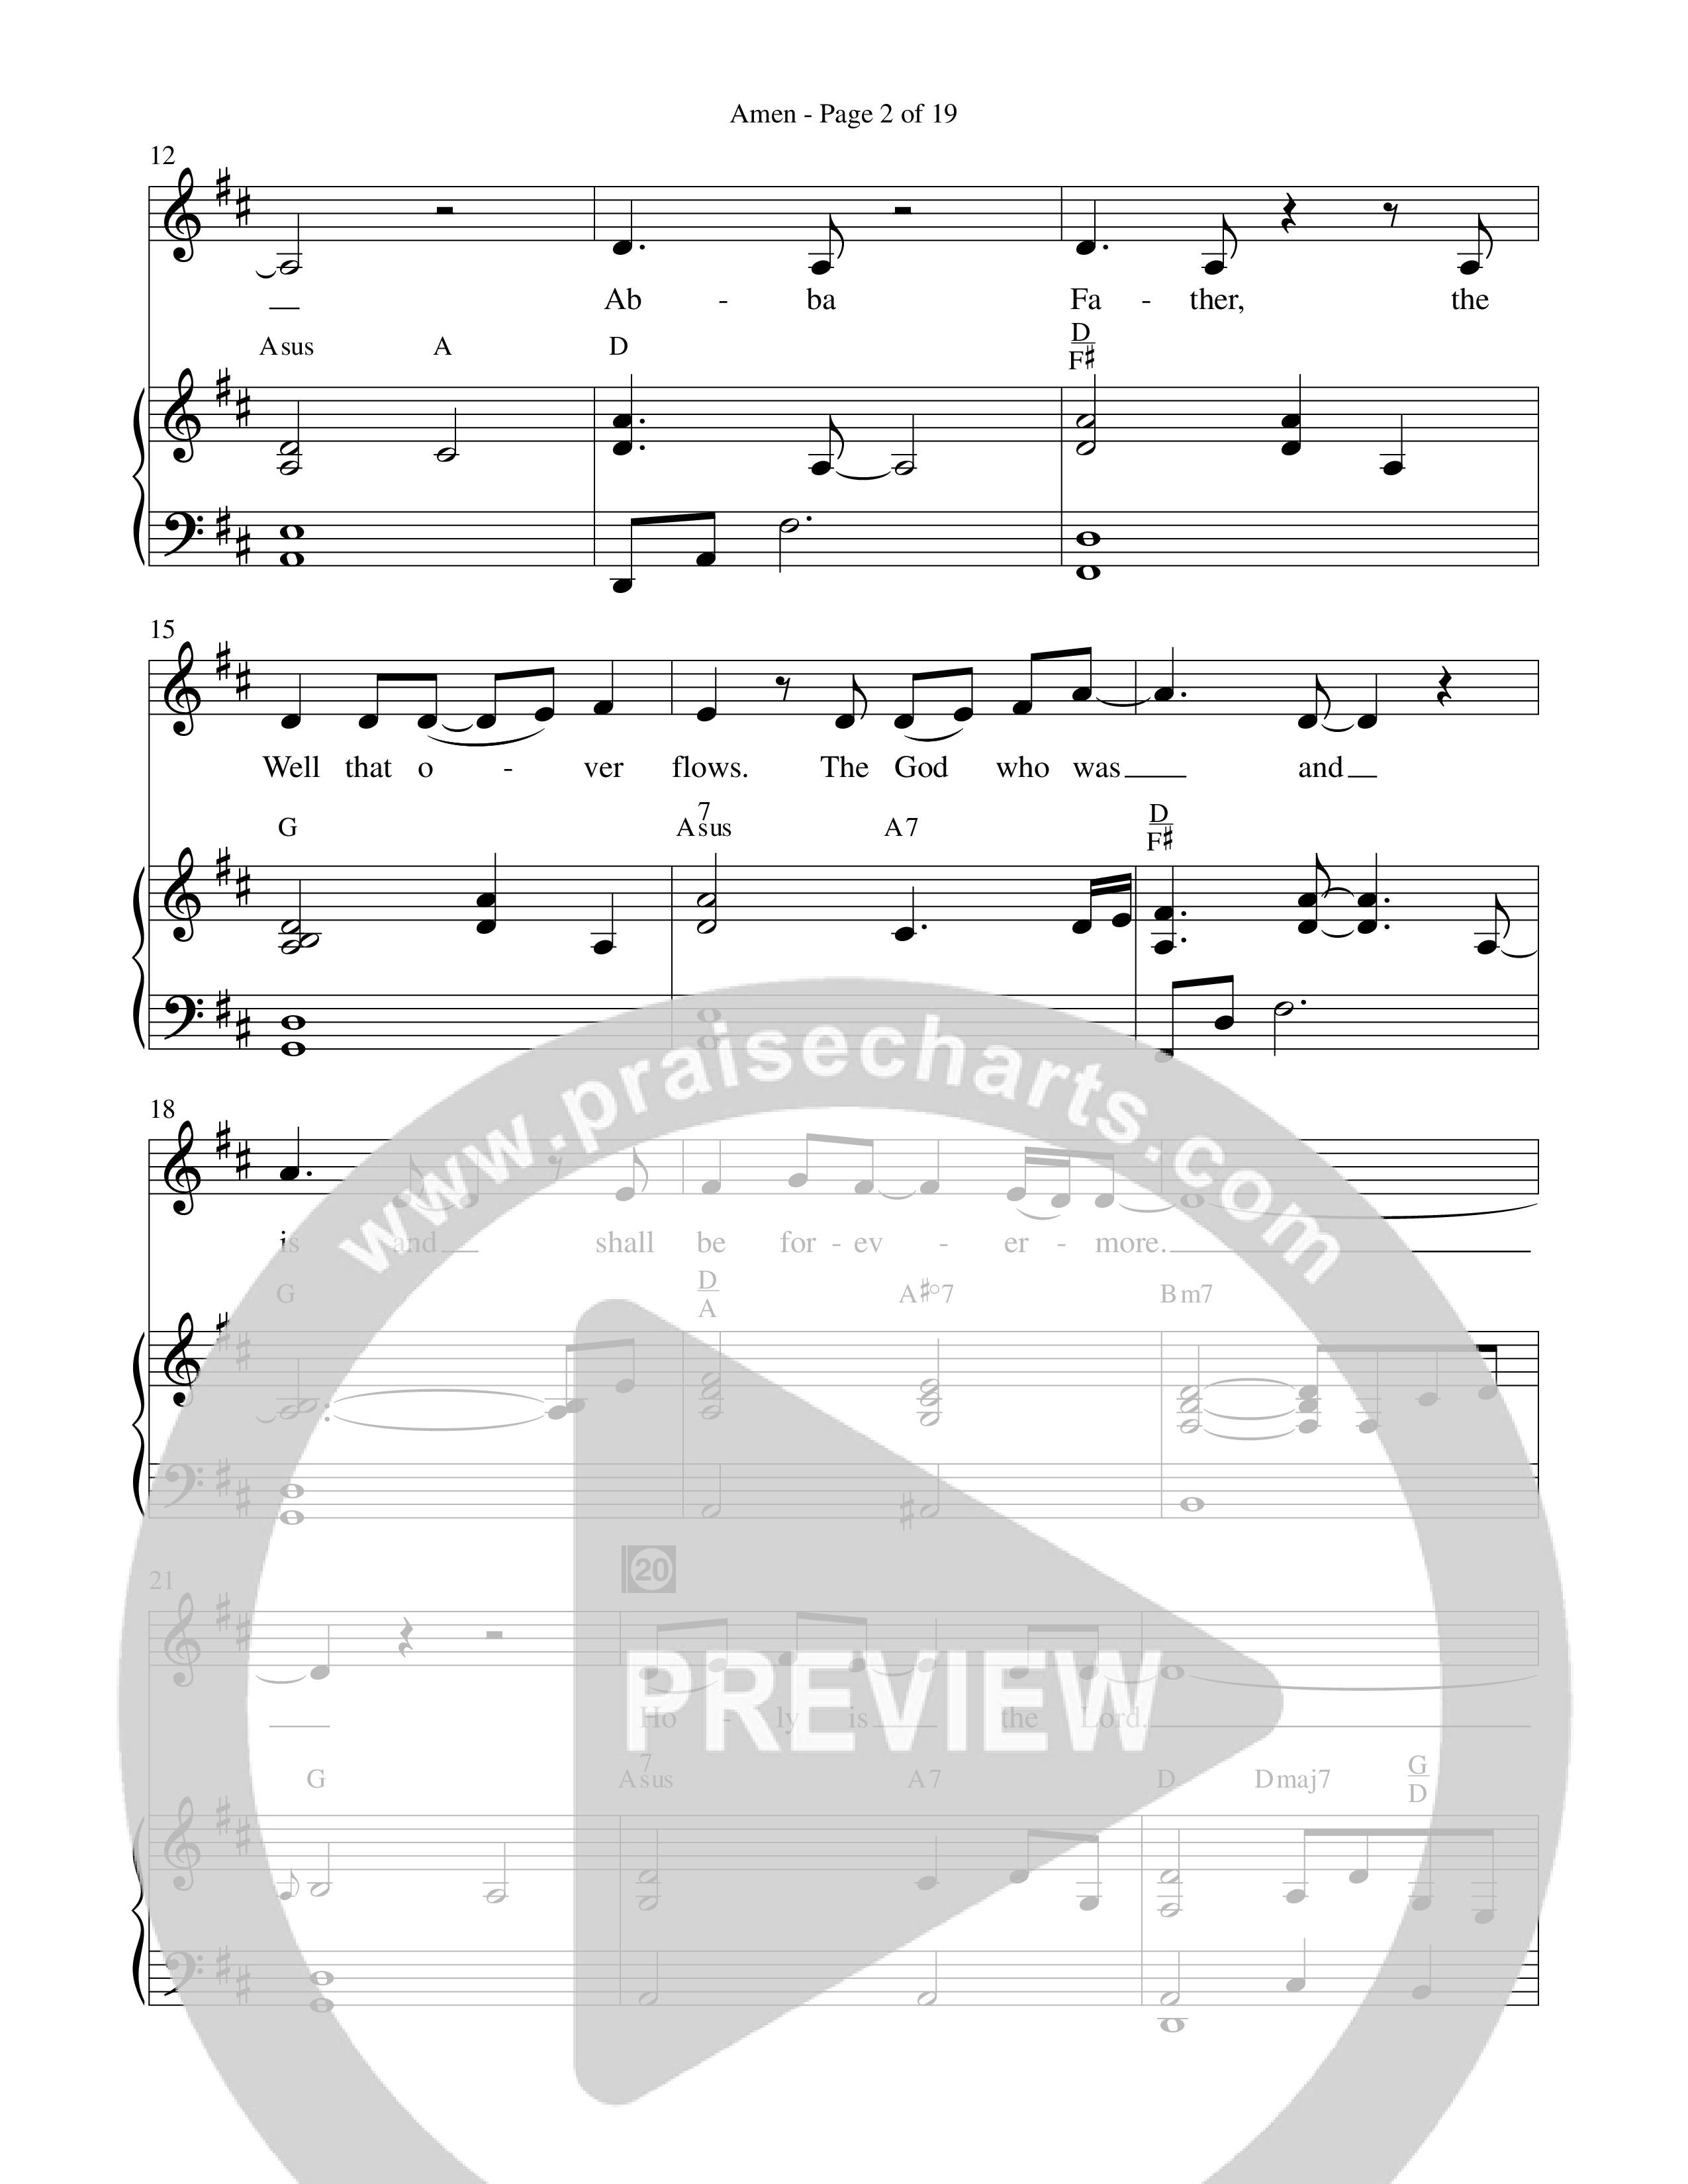 Amen (Choral Anthem SATB) Choral Vocal Parts (Prestonwood Worship / Prestonwood Choir / Arr. Jonathan Walker)